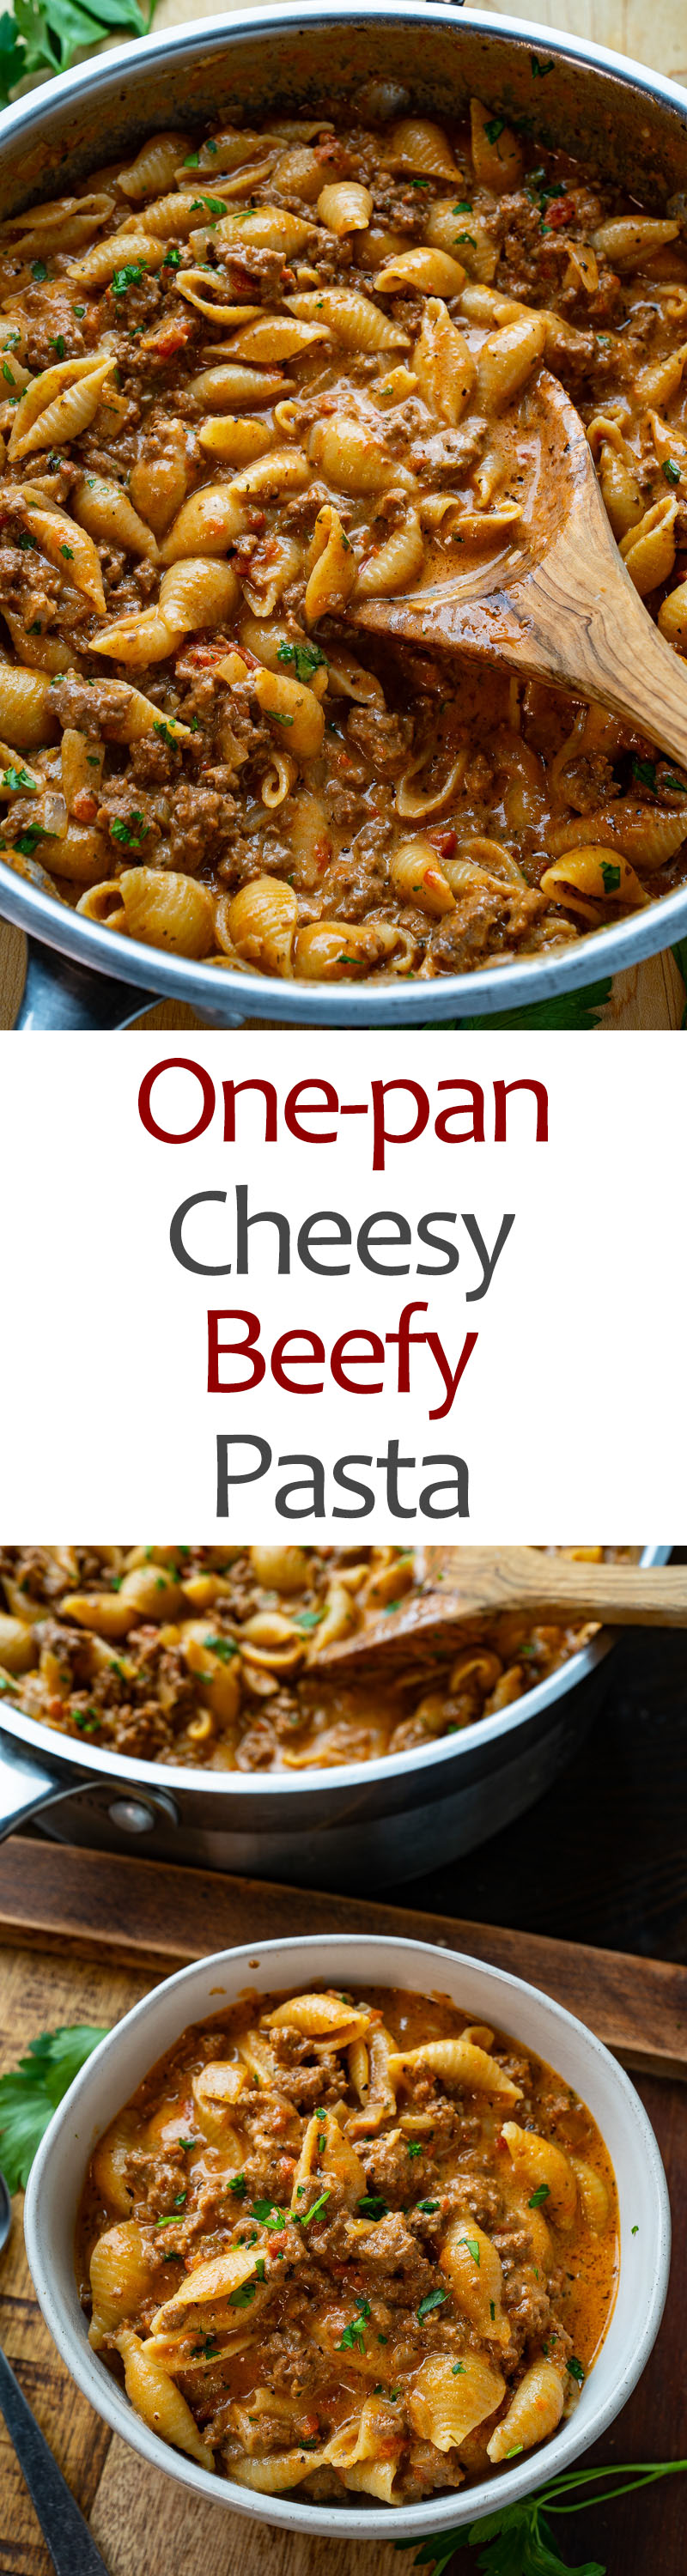 One-pan Cheesy Beefy Pasta